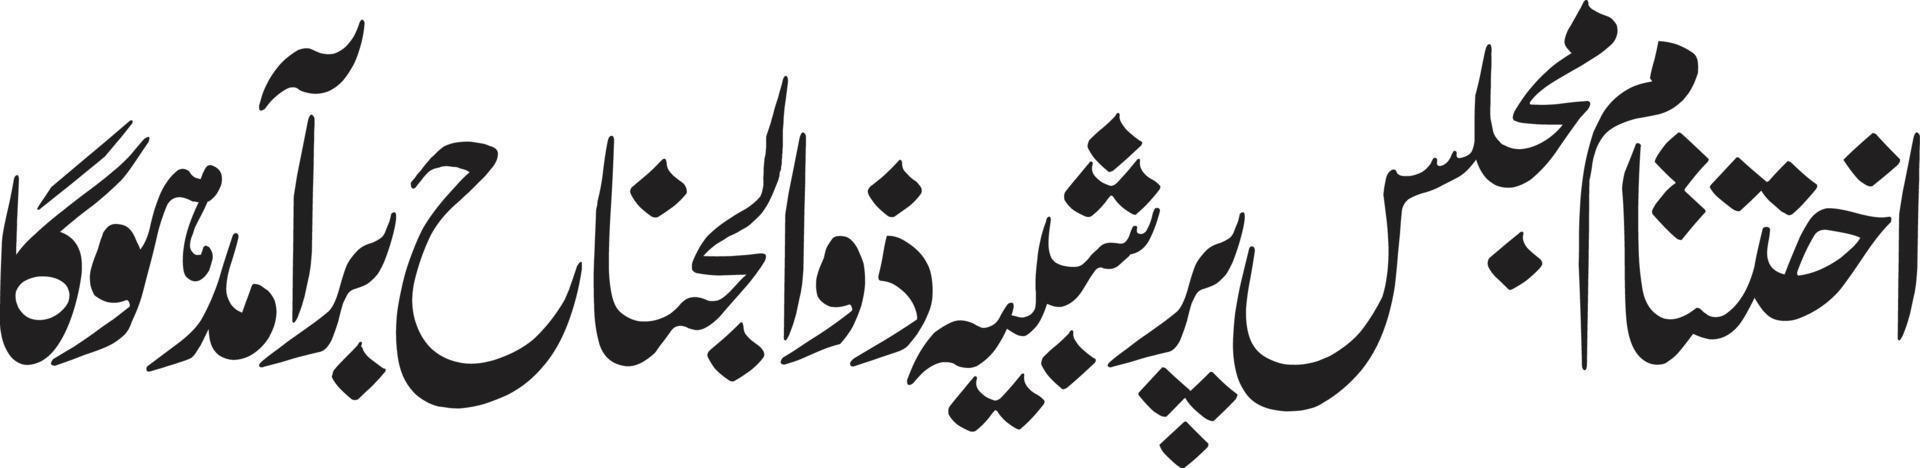 ikhtamam mejless pur islamico urdu calligrafia gratuito vettore